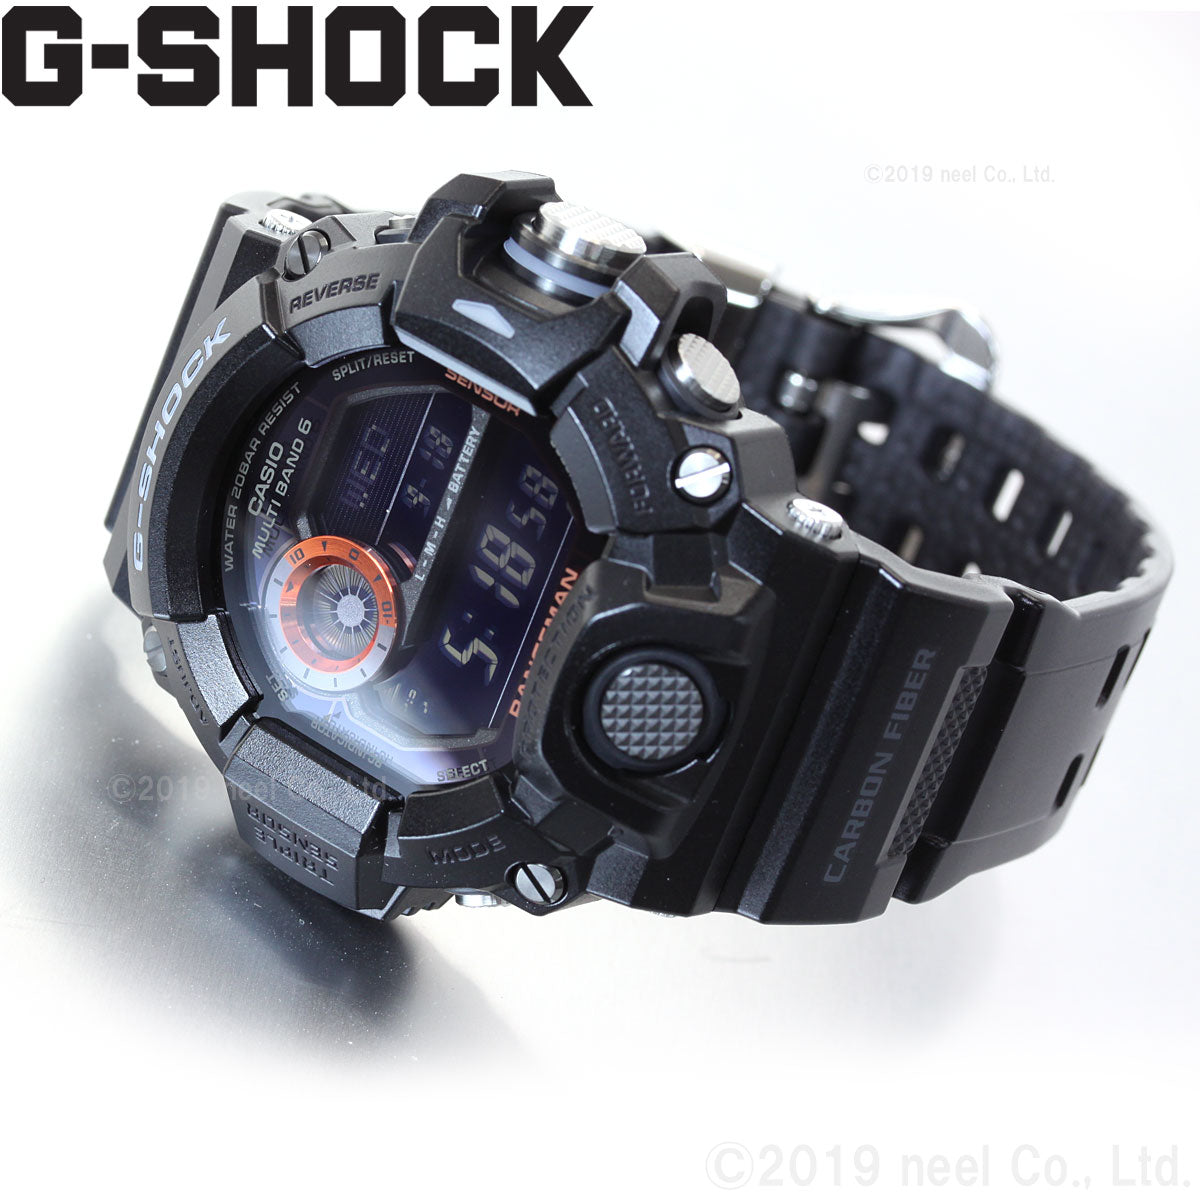 G-SHOCK Gショック RANGEMAN レンジマン GW-9400BJ-1JF メンズ 腕時計 電波ソーラー デジタル ブラック マス –  neel selectshop